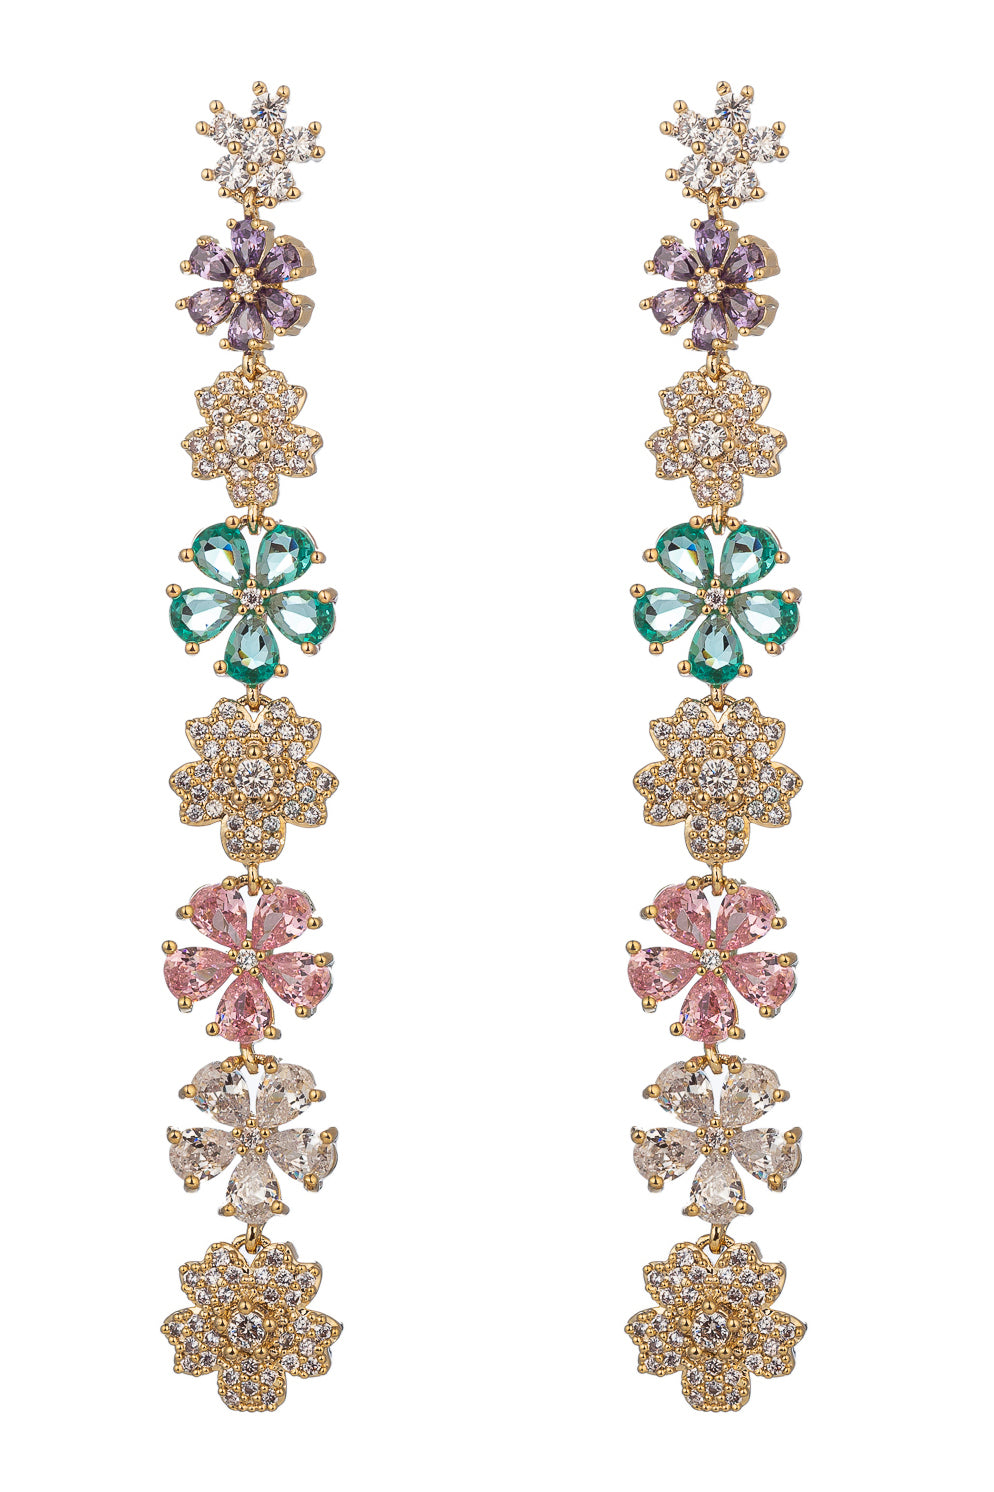 Gold tone brass dangle earrings with CZ crystal flower pendants.